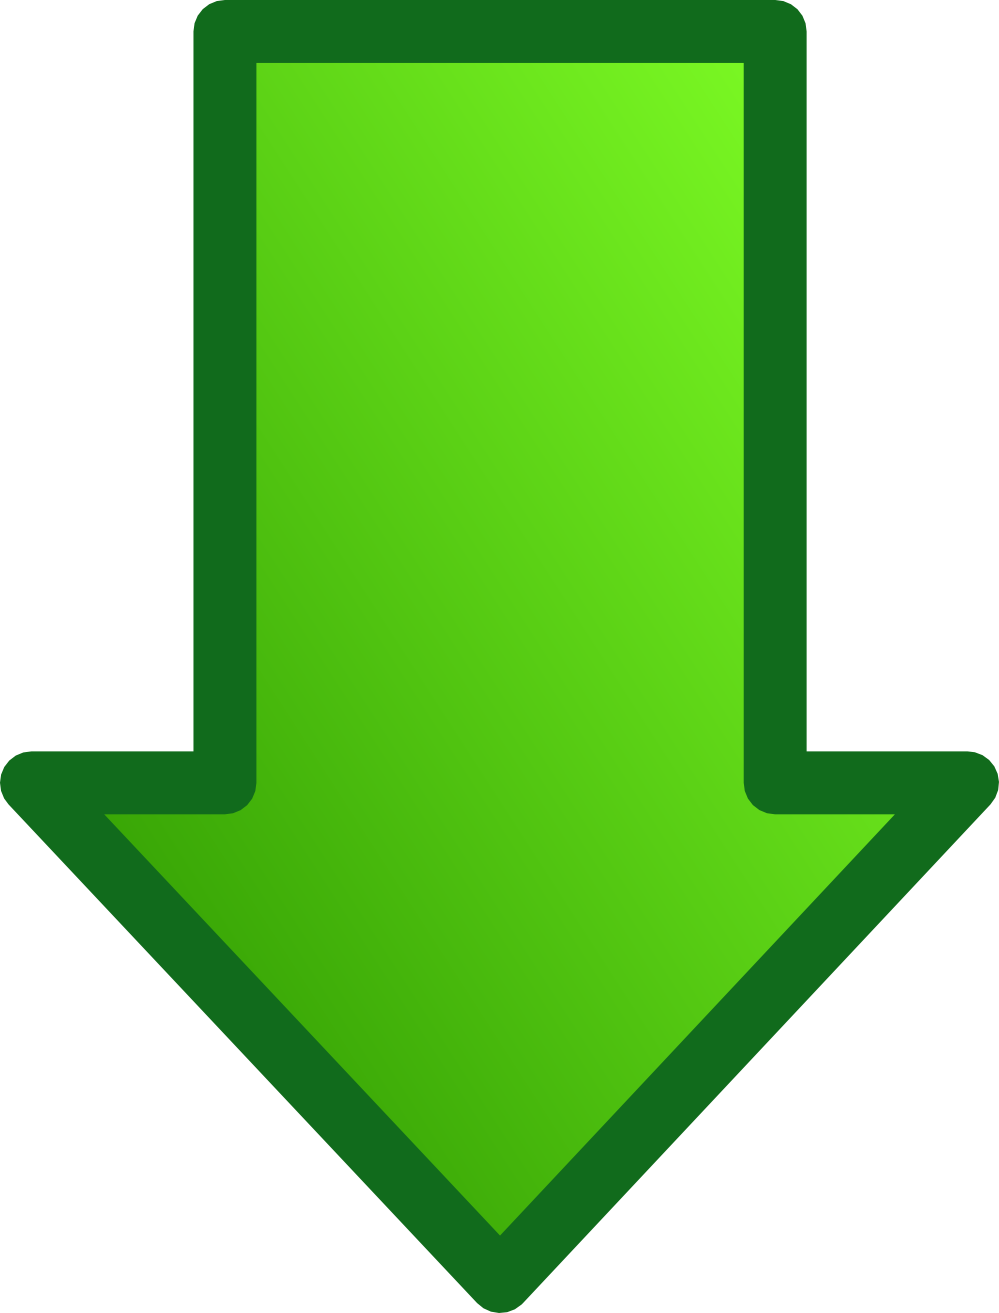 Green Arrow Clip Art - Clipart library